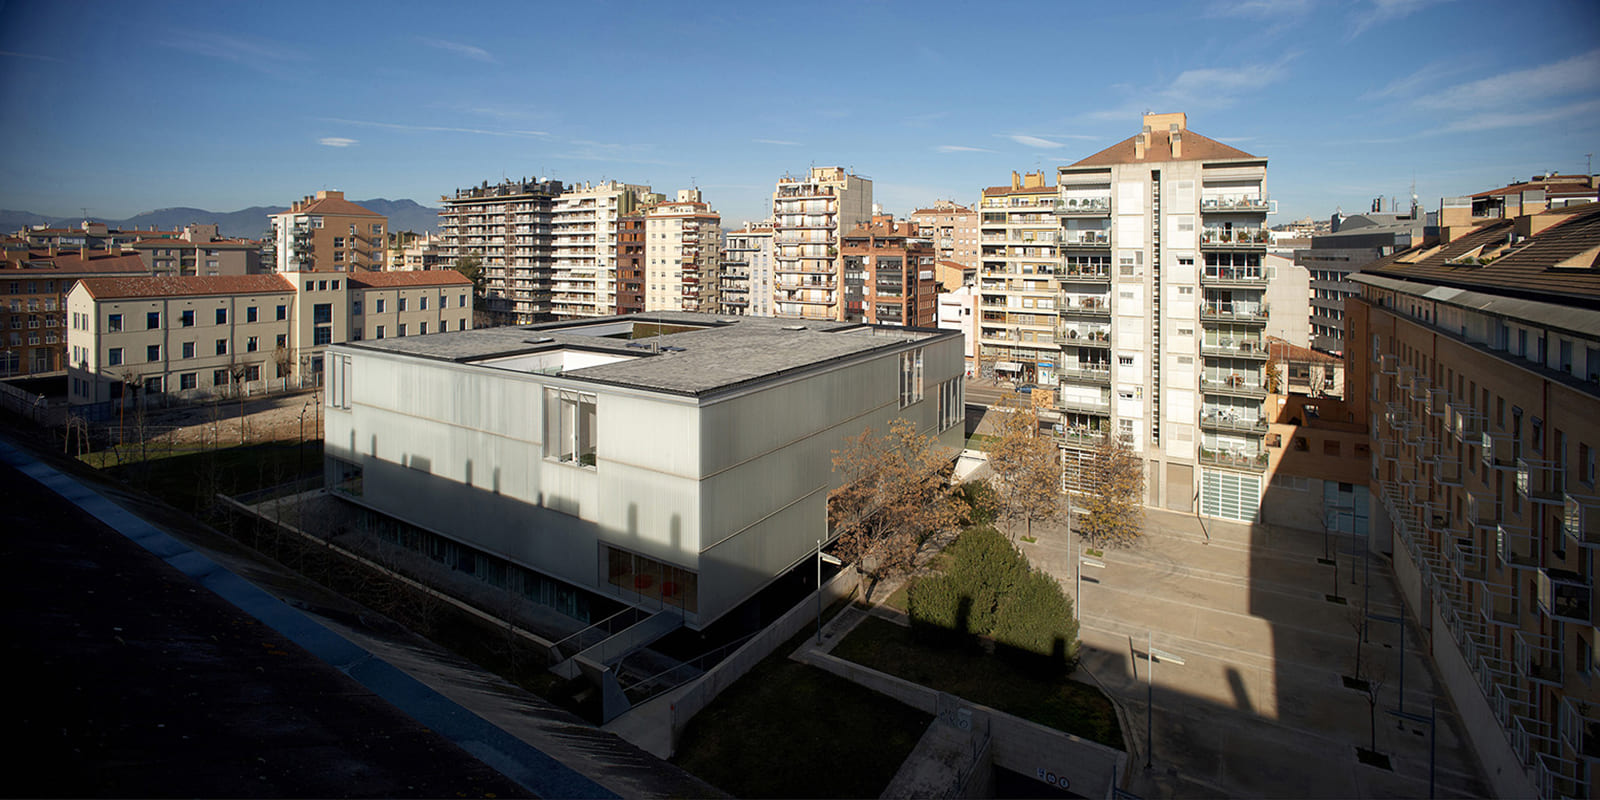 Girona Public Library